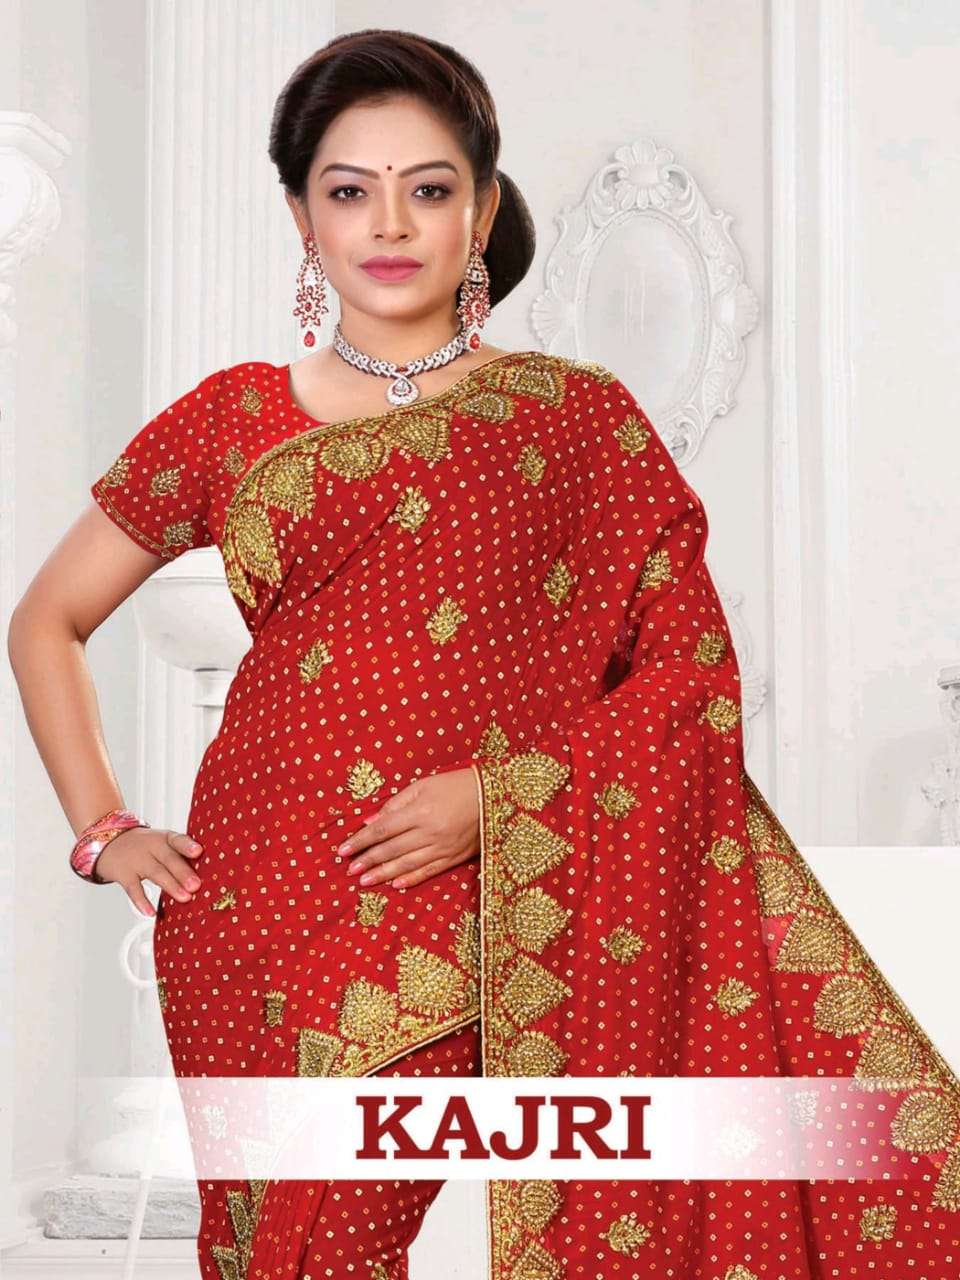 Kajri by ranjna sarees fabric Georgette bandhani embroidery worked heavy Diamond wedding saree collecton 